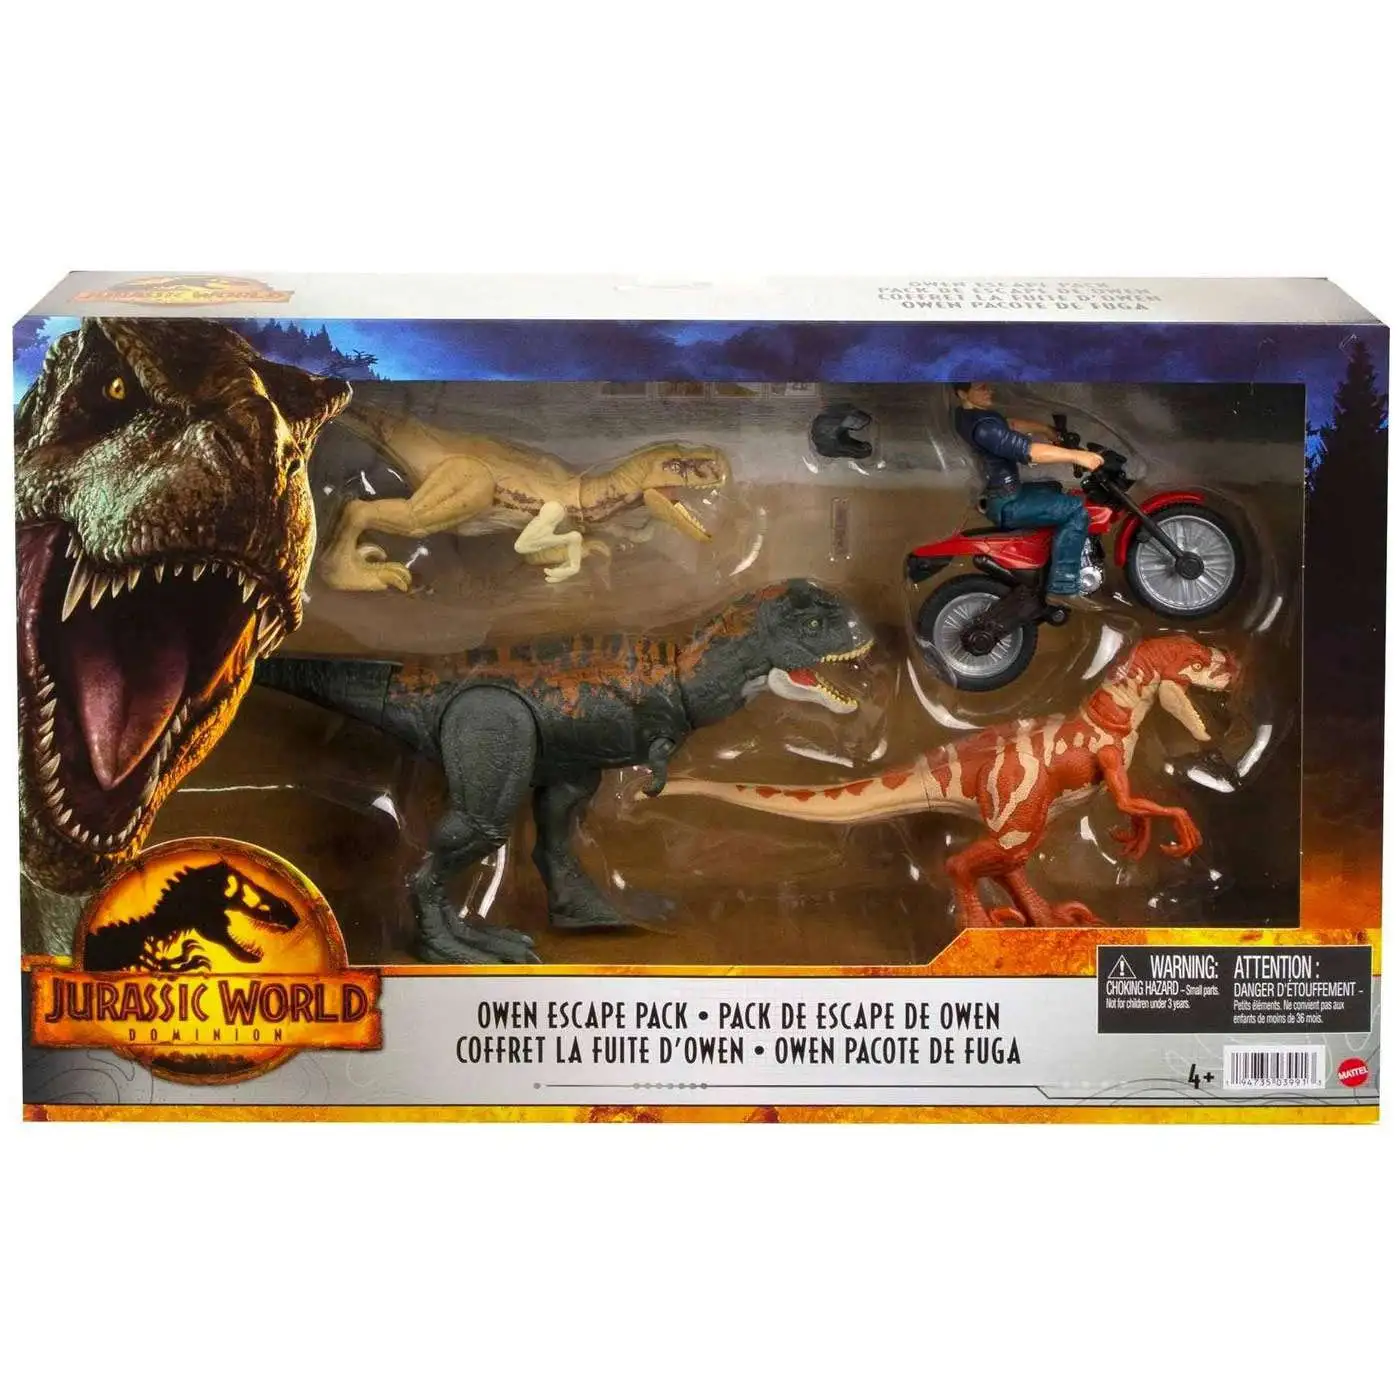 Jurassic World Dominion Owen Escape Pack Action Figure 4-Pack [Owen Grady on Motorcycle, 2x Atrociraptors & Carnotaurus]